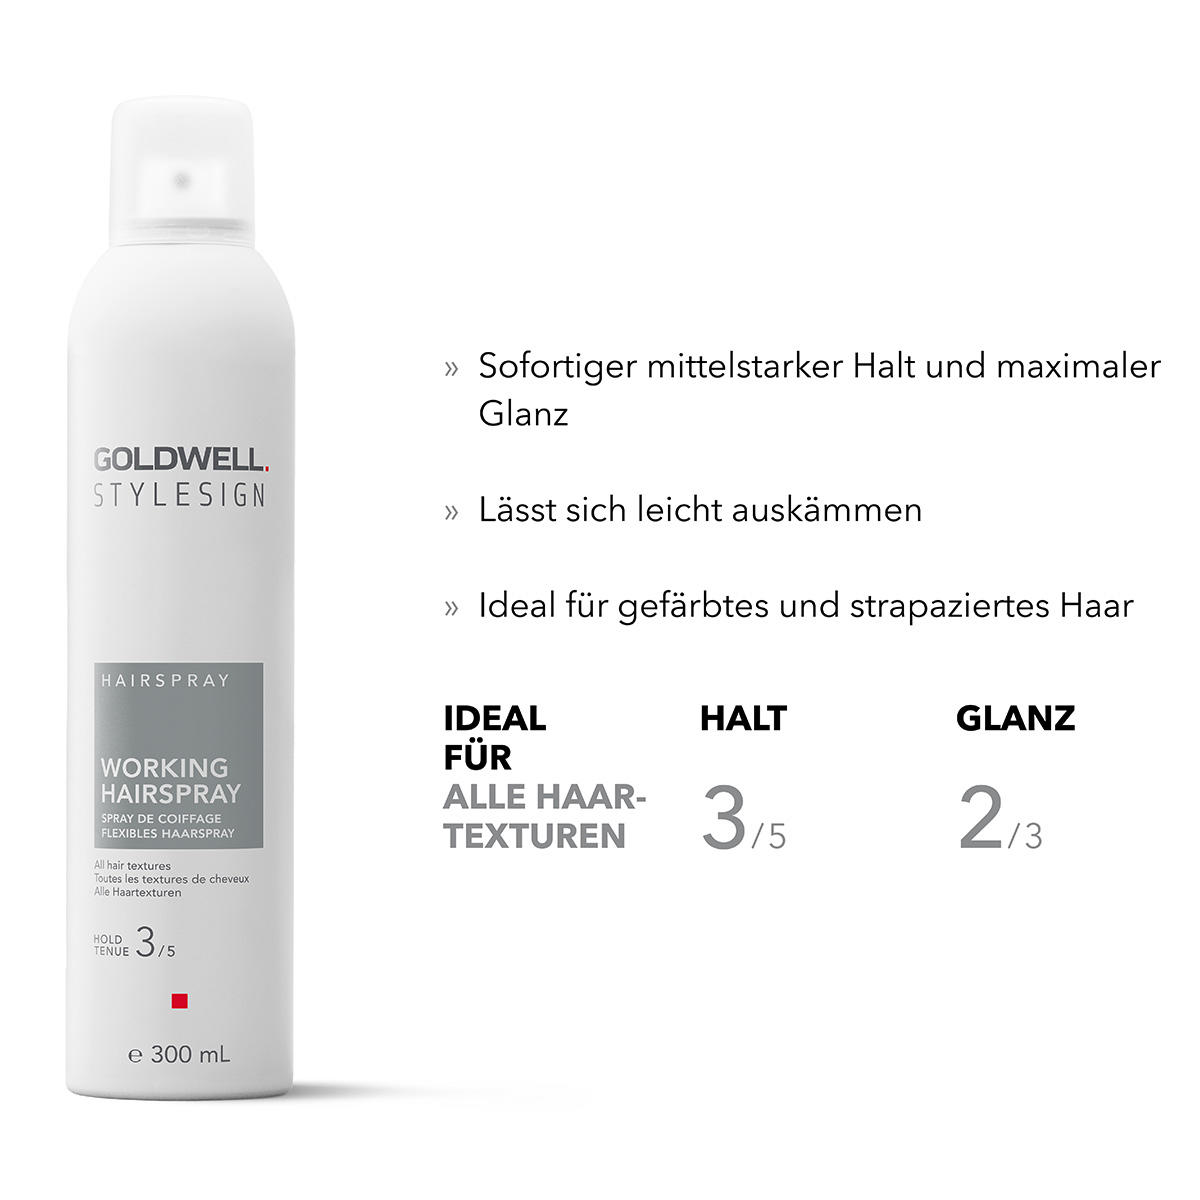 Goldwell StyleSign Flexible hairspray mittlerer Halt 300 ml - 2